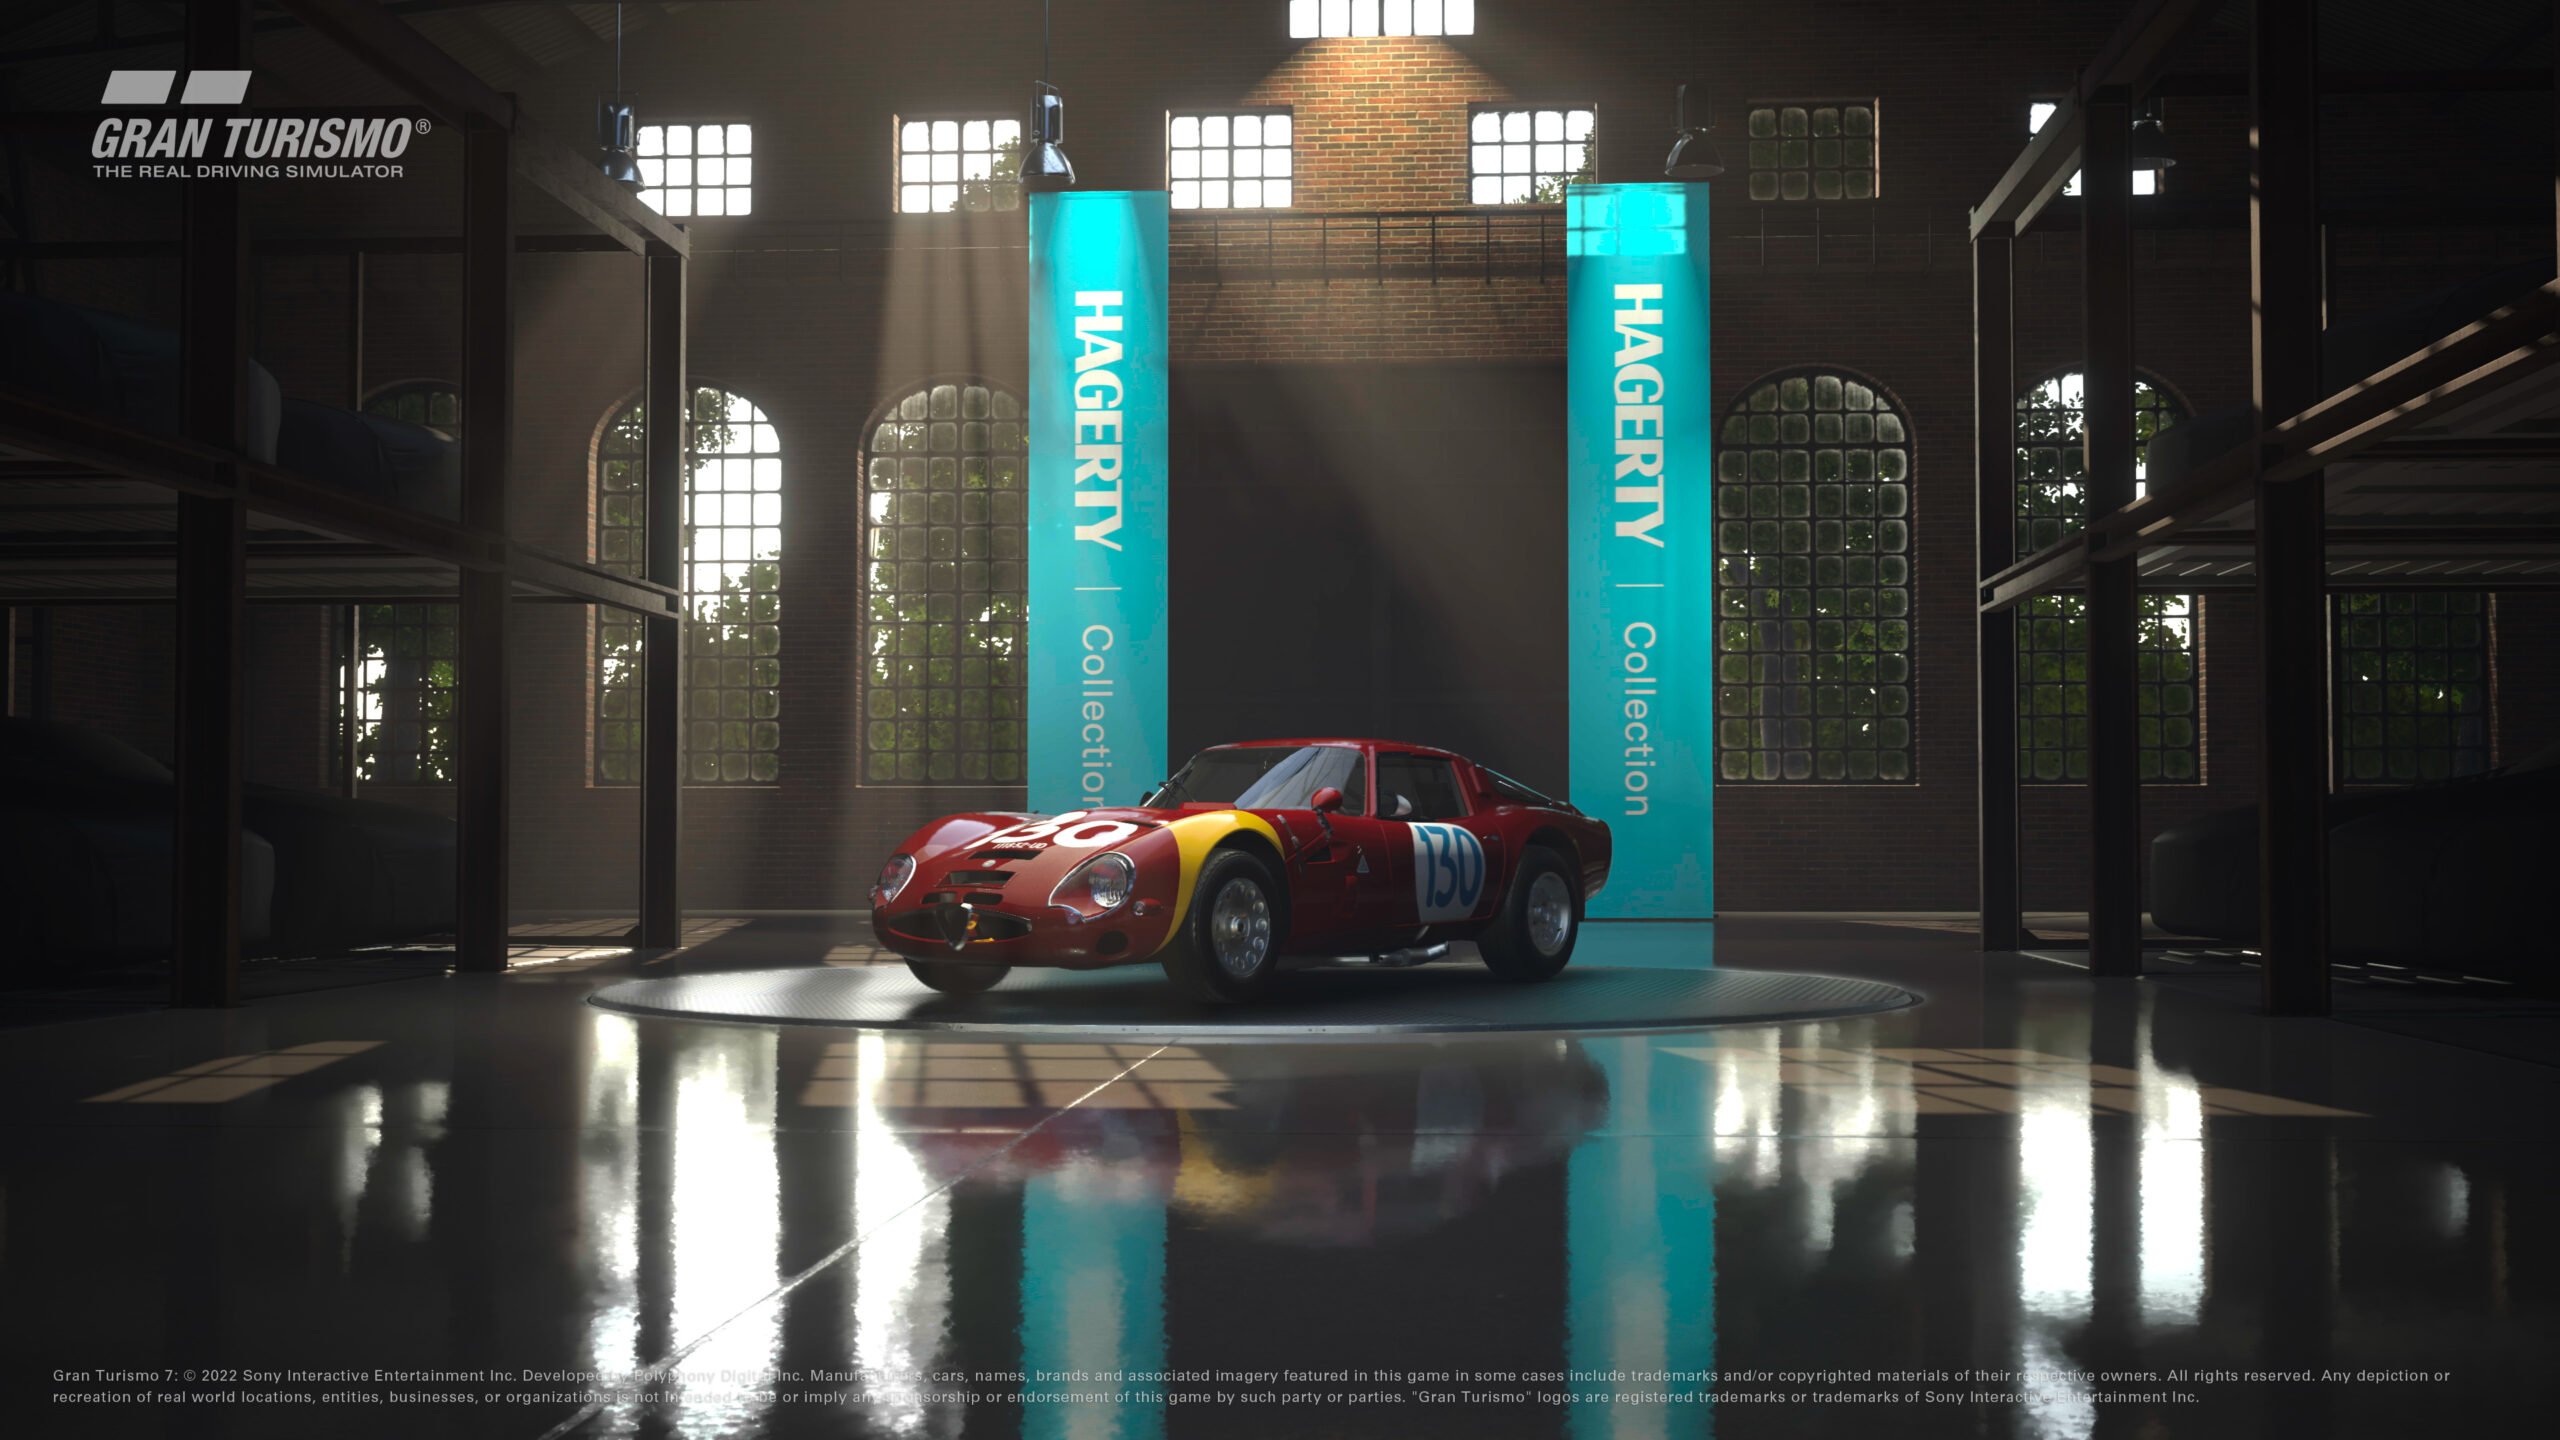 Games Like 'Gran Turismo 7' to Play Next - Metacritic